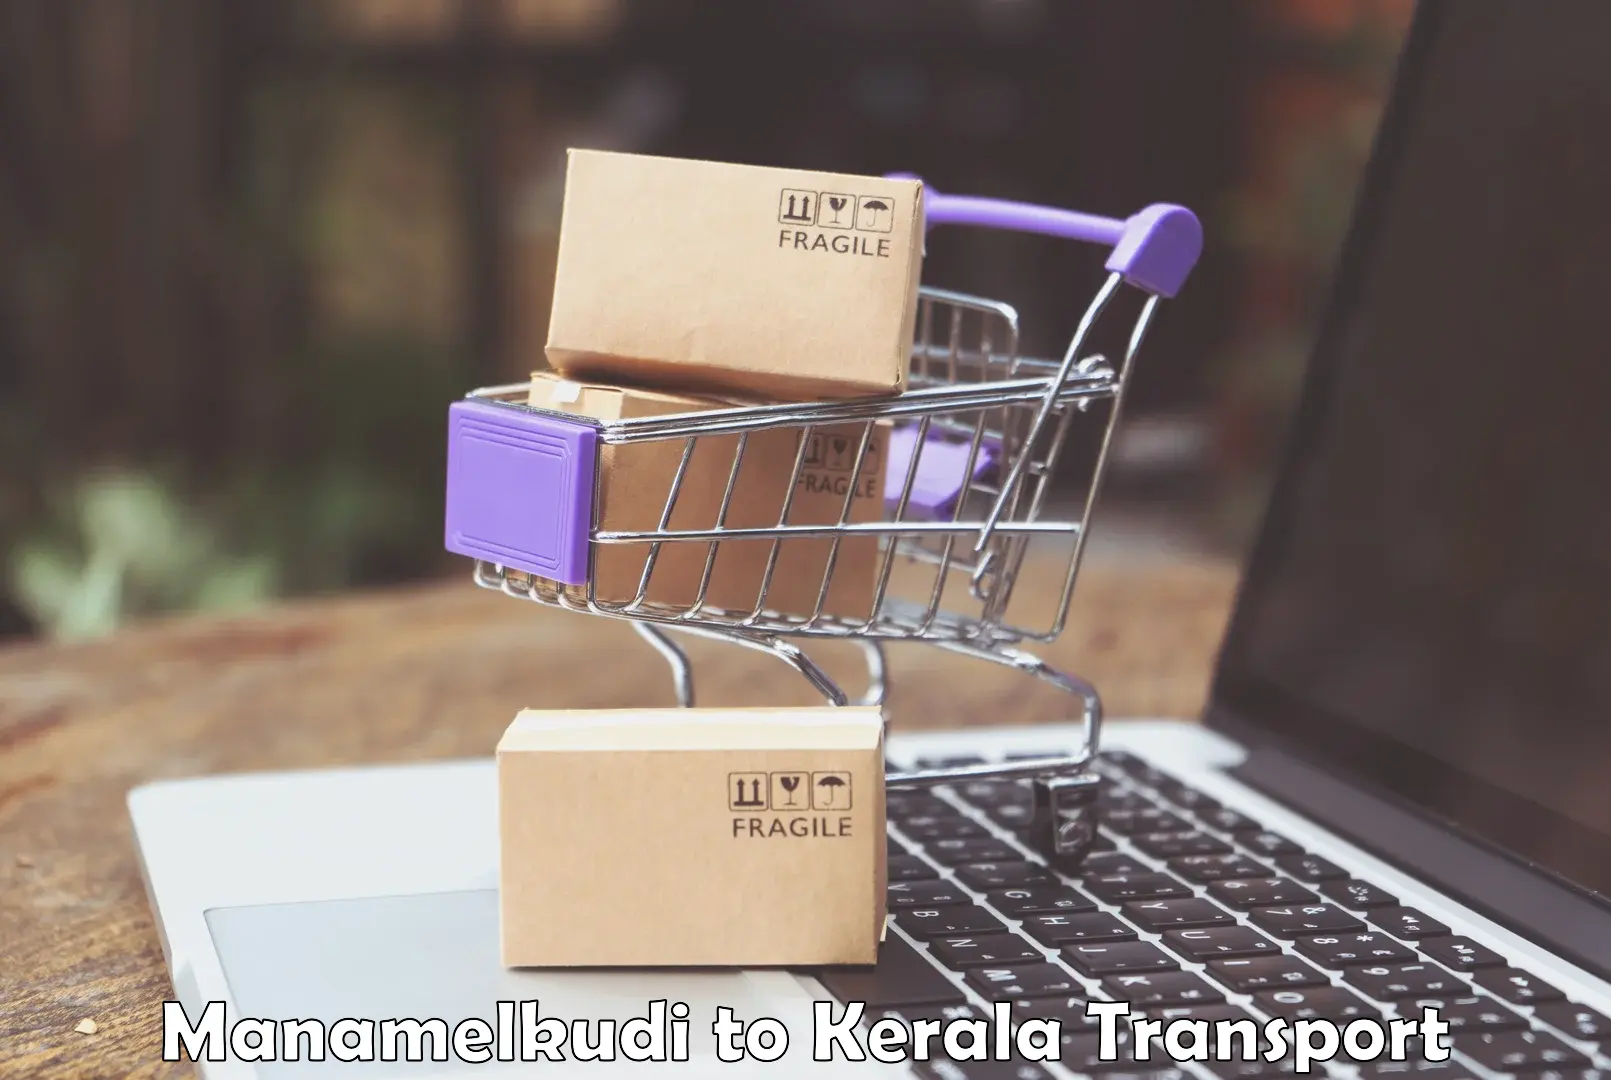 Transport in sharing Manamelkudi to Kerala